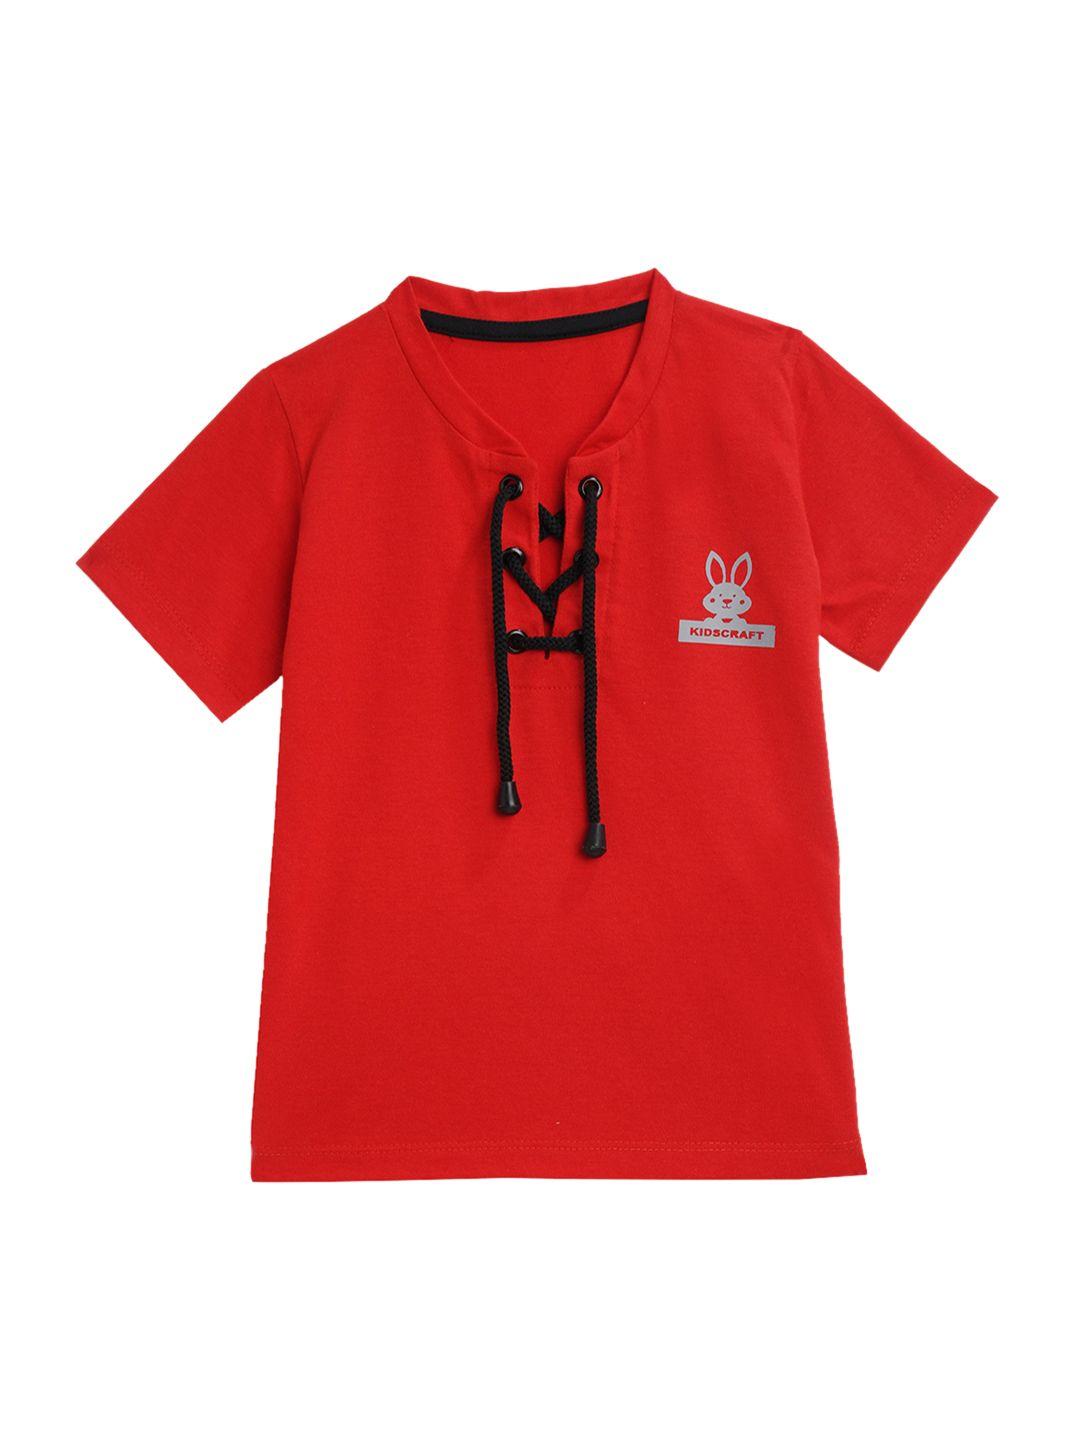 kidscraft boys red printed mandarin collar t-shirt